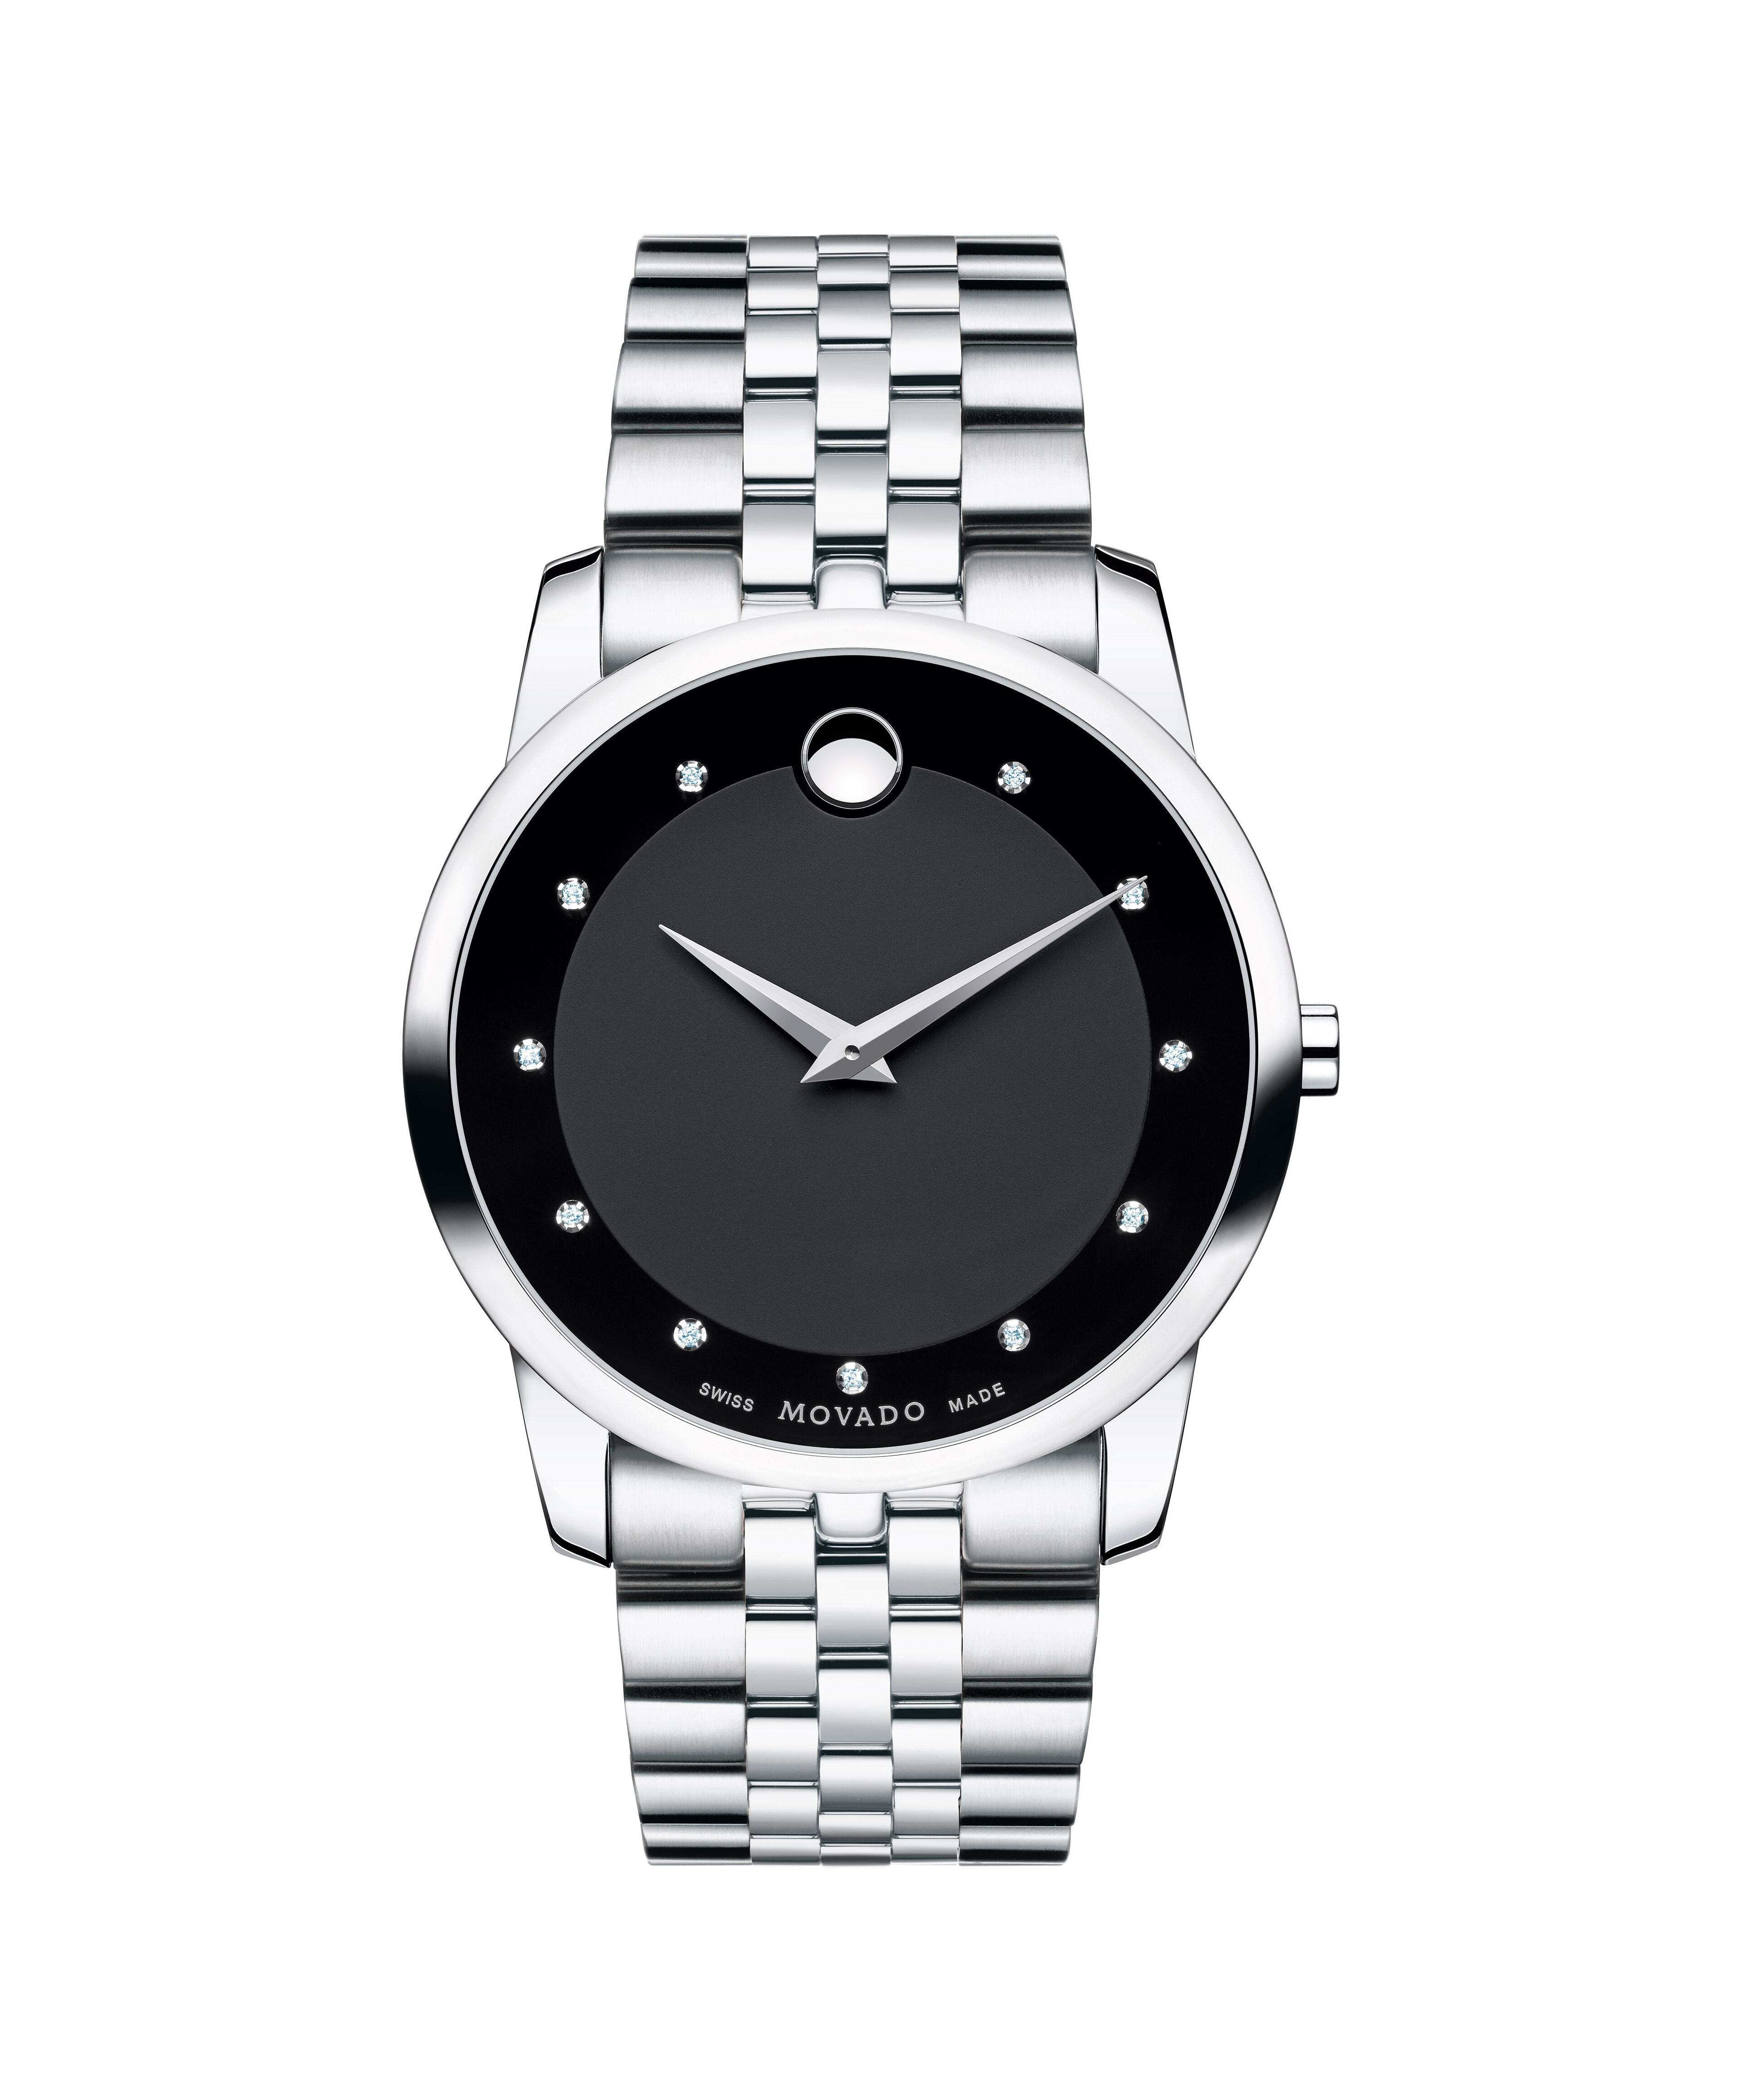 Vuitton Replica Watches